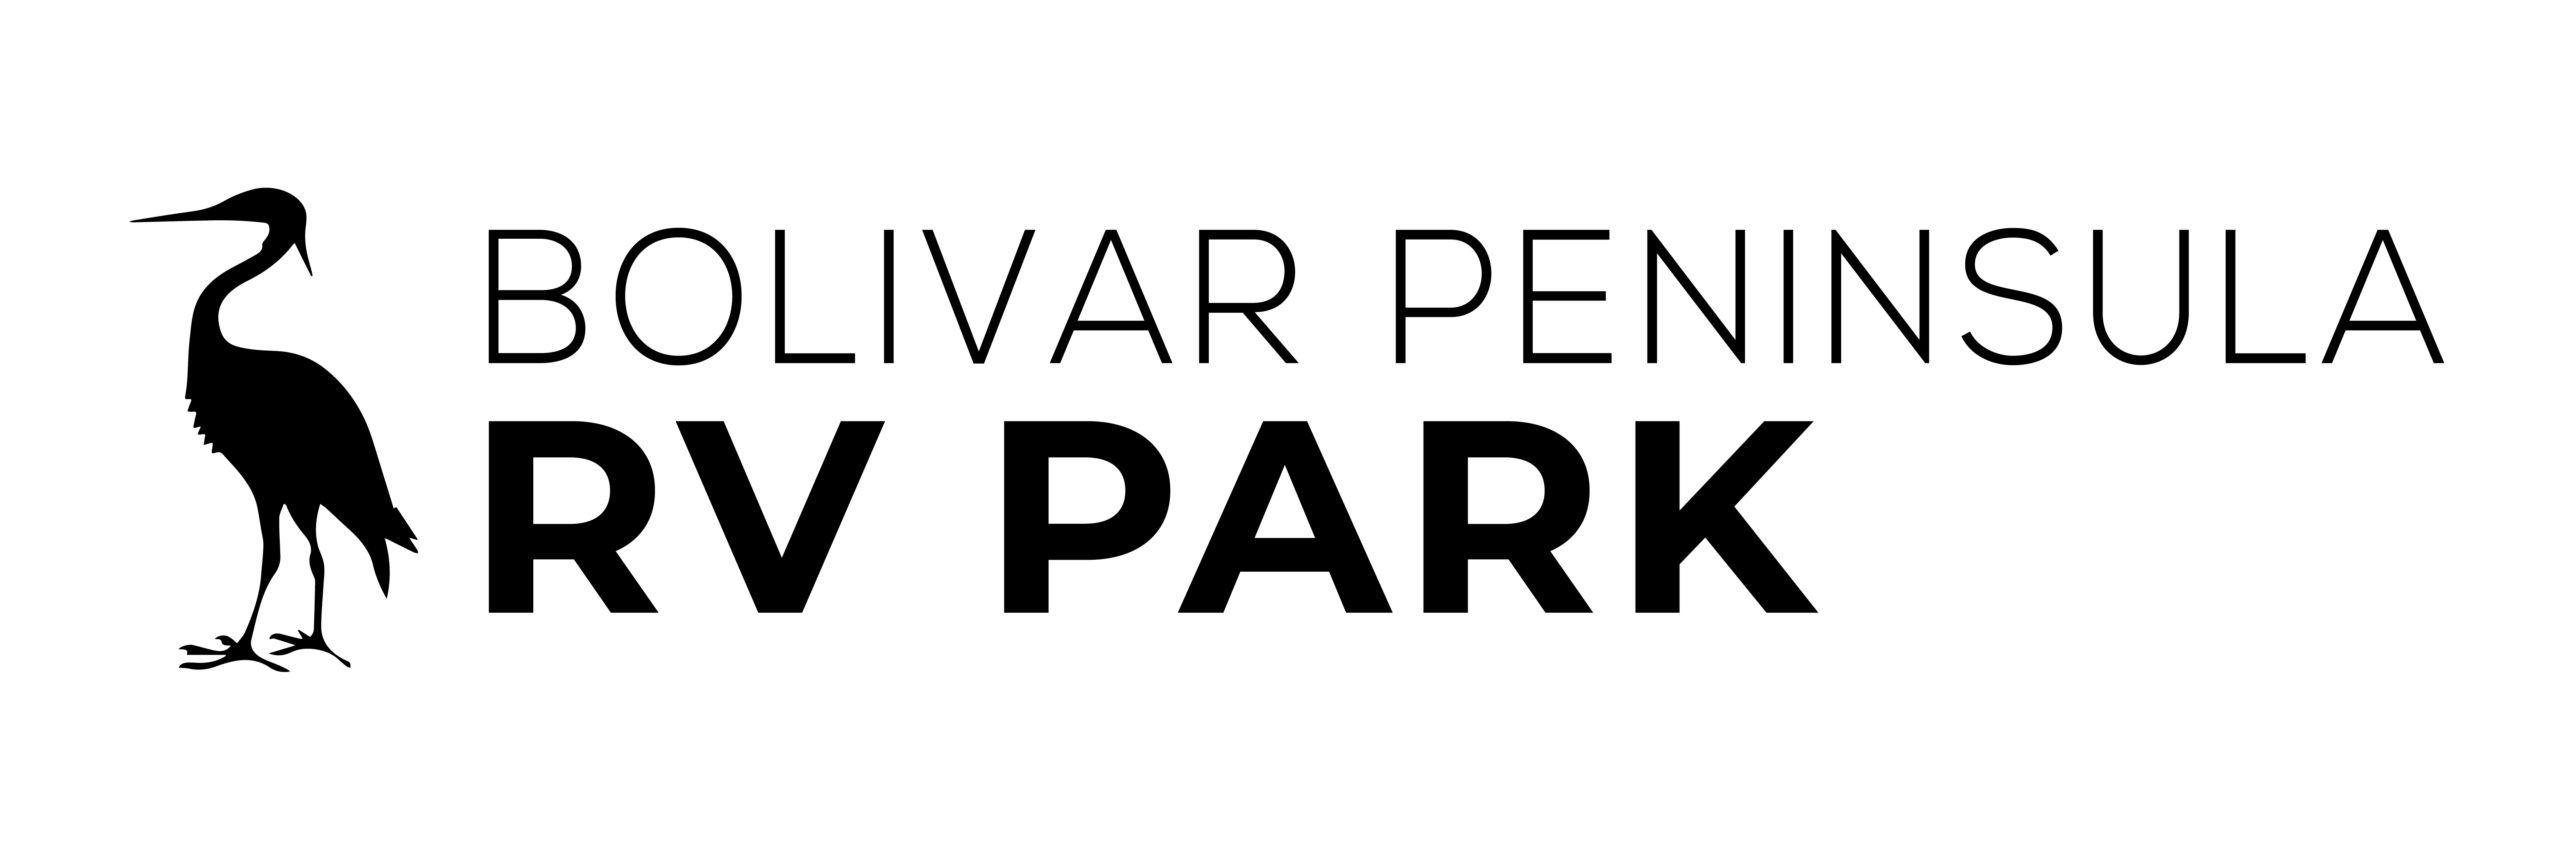 Bolivar Peninsula RV Park Banner